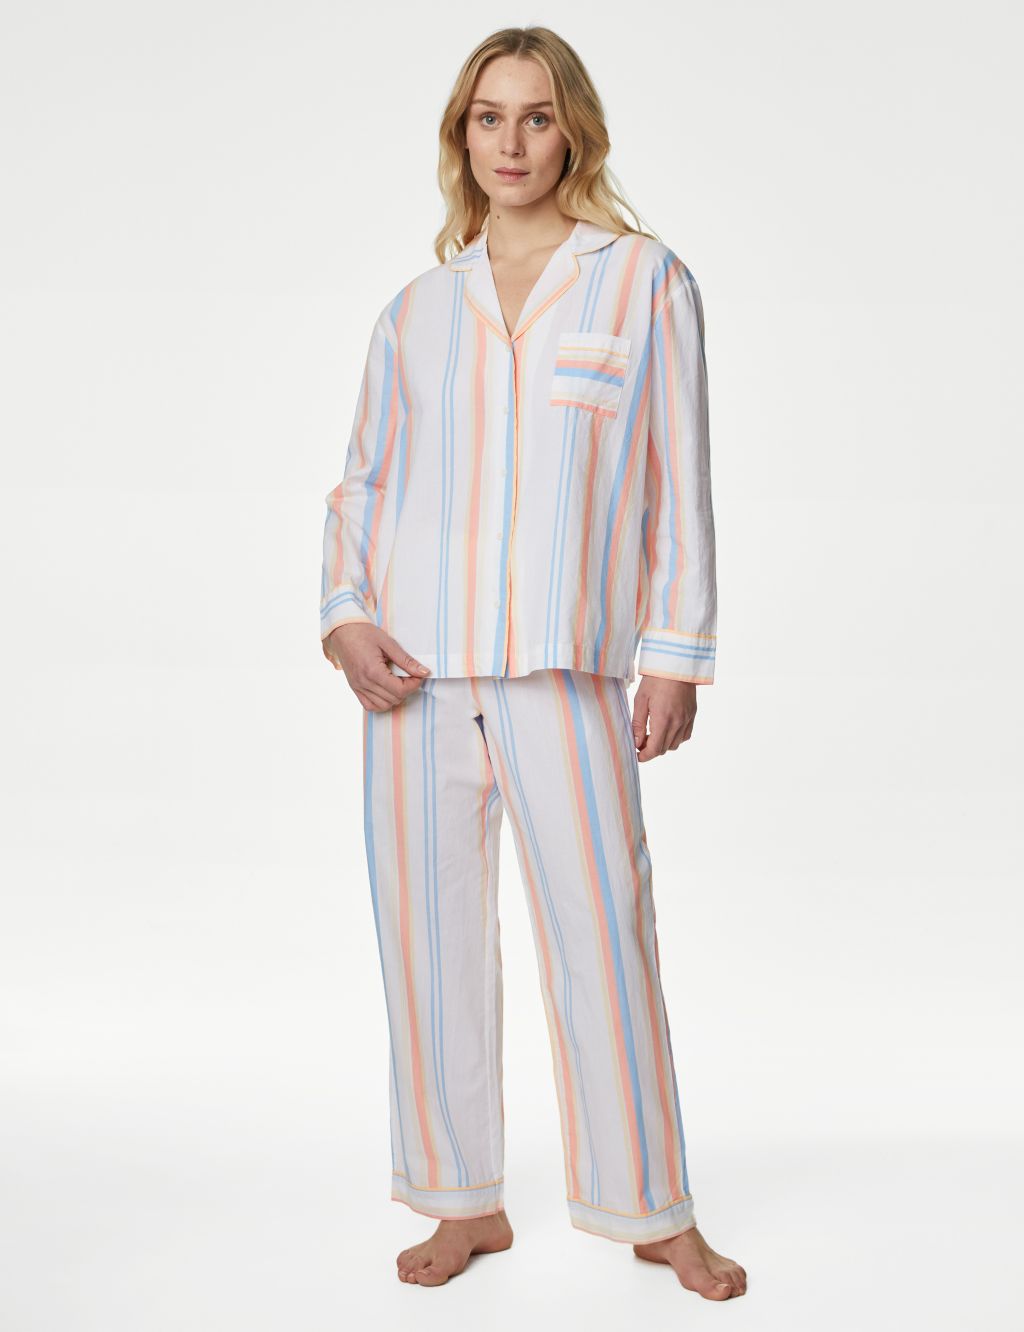 Women's Long-sleeved Pyjamas